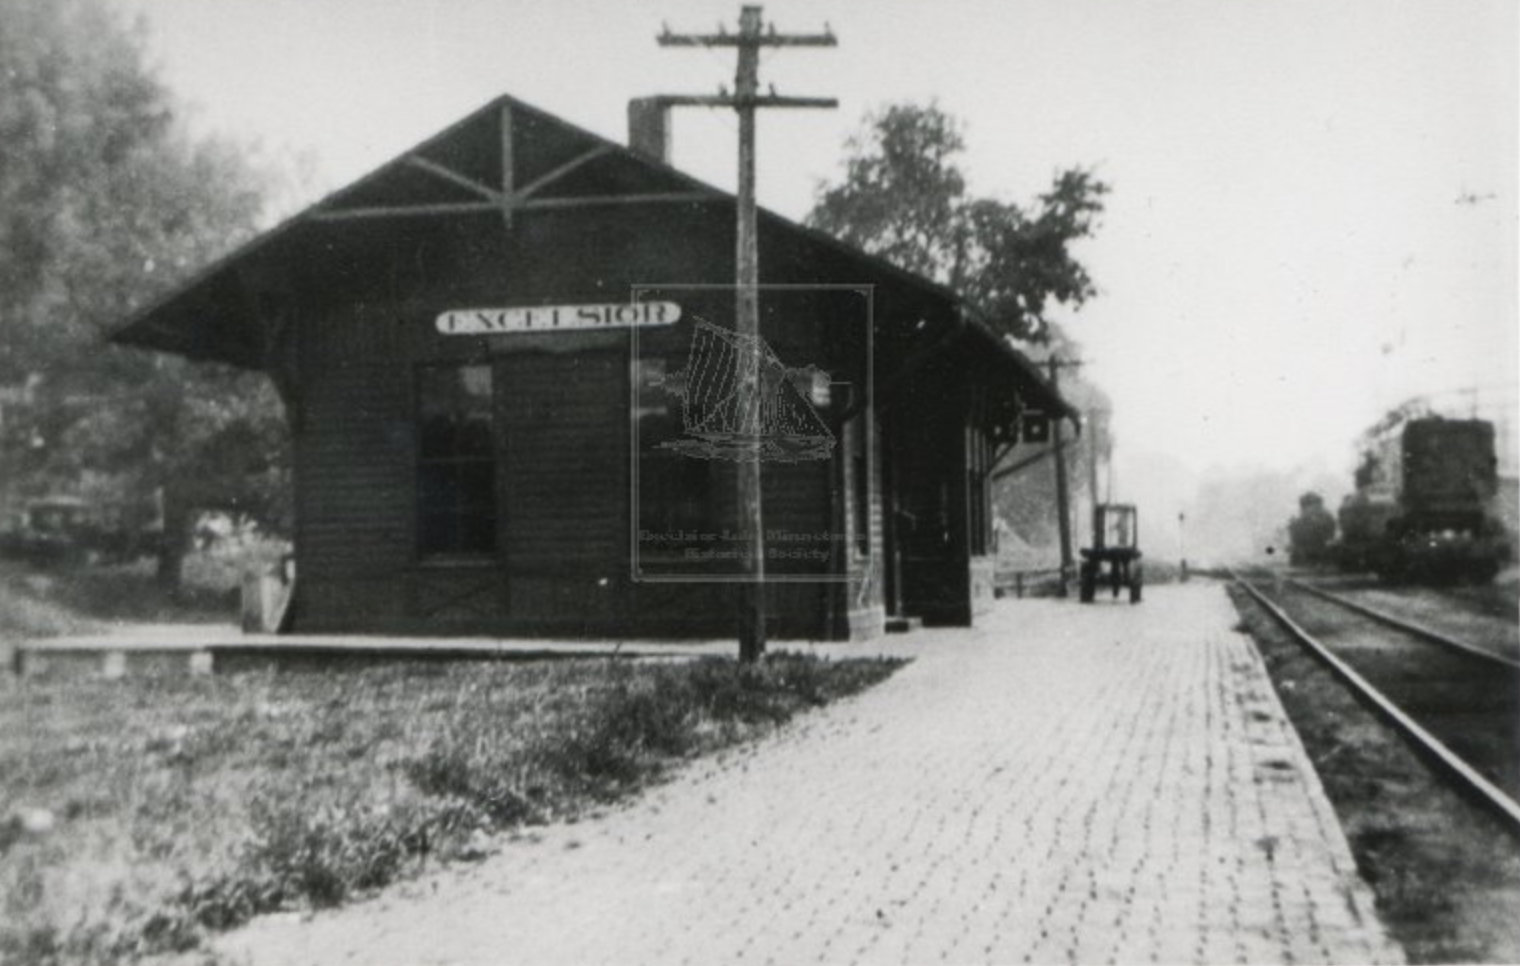 Historic Excelsior Railroad